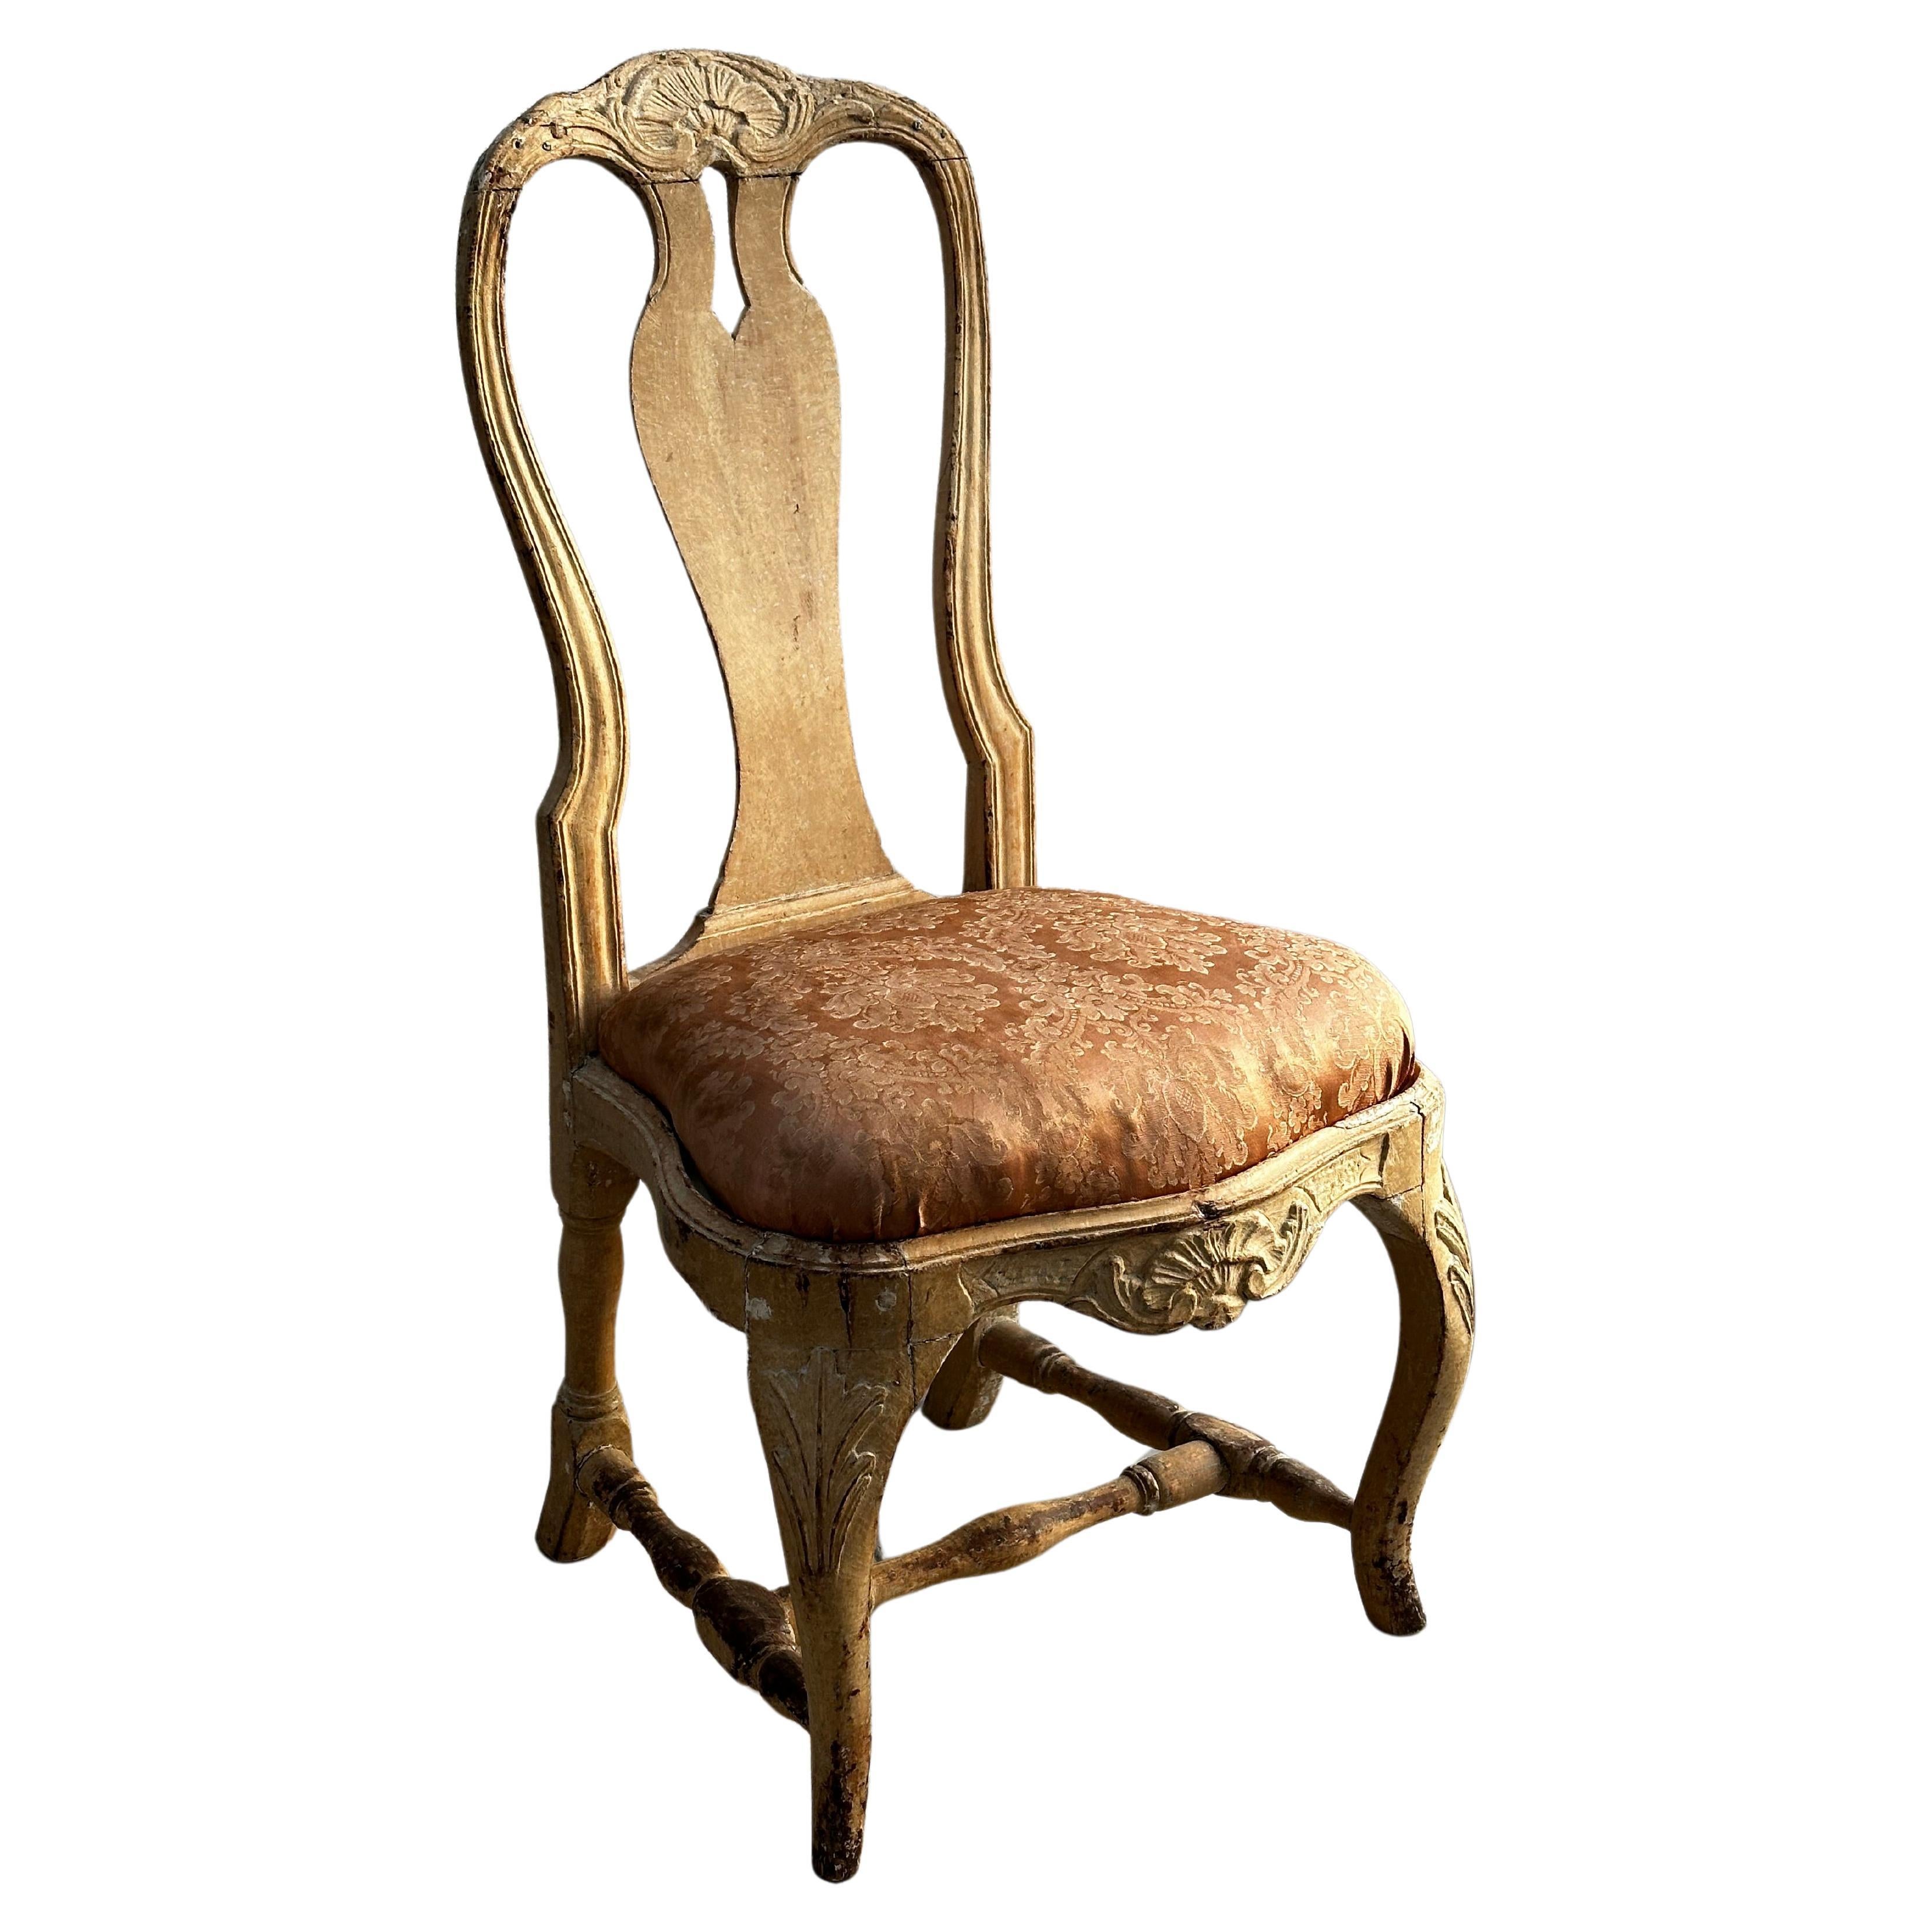 18th Century Rococo chair, with original color